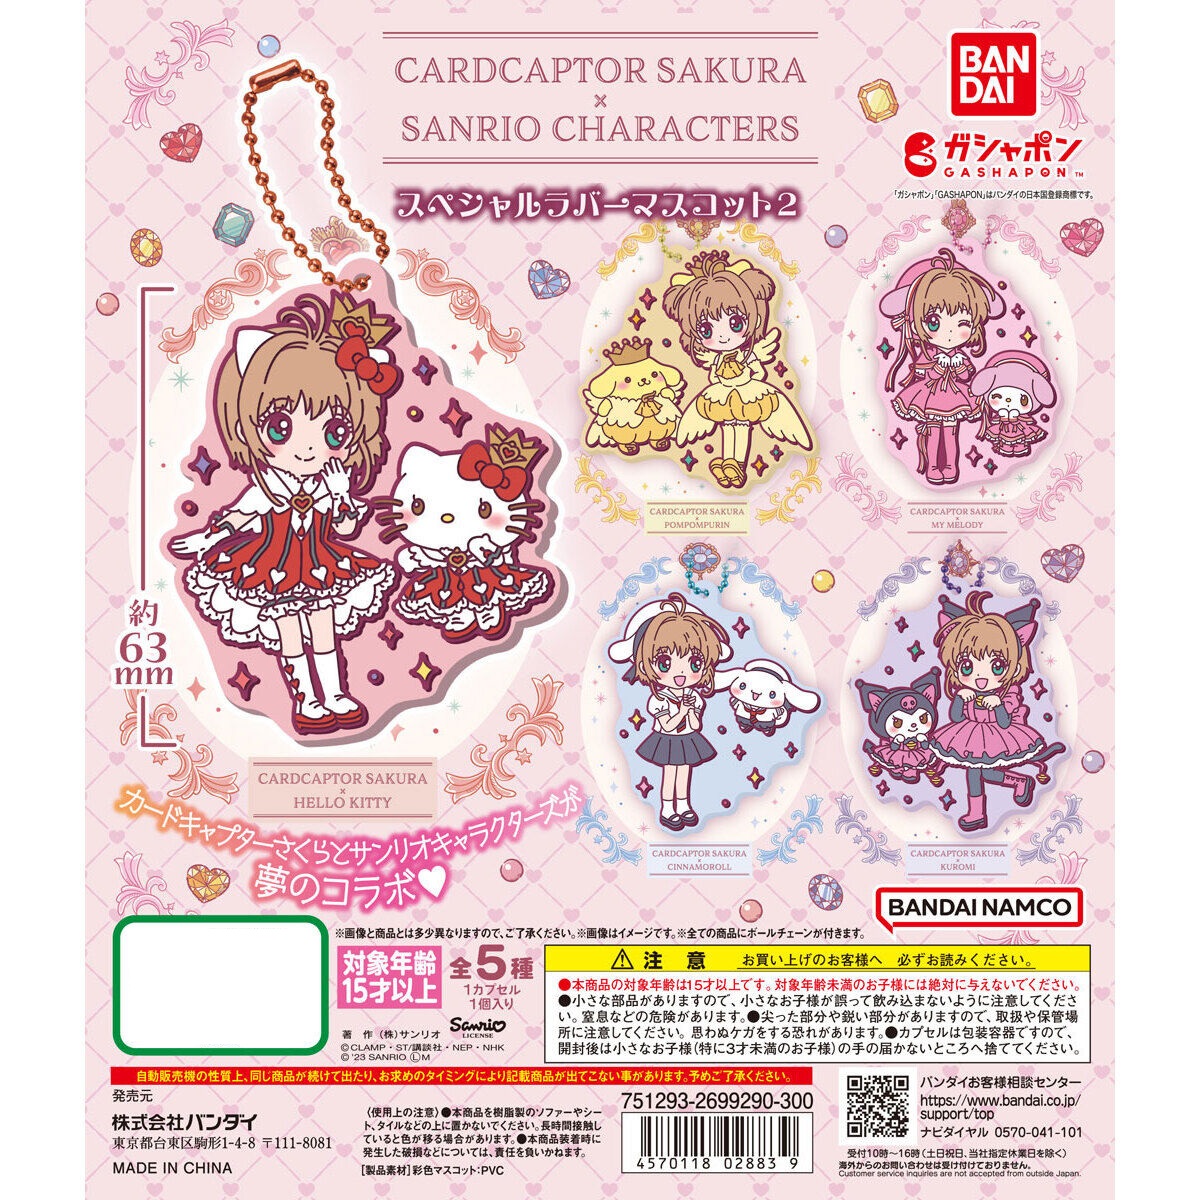 Cardcaptor Sakura with Sanrio Rubber Strap Keychain Random Gashapon